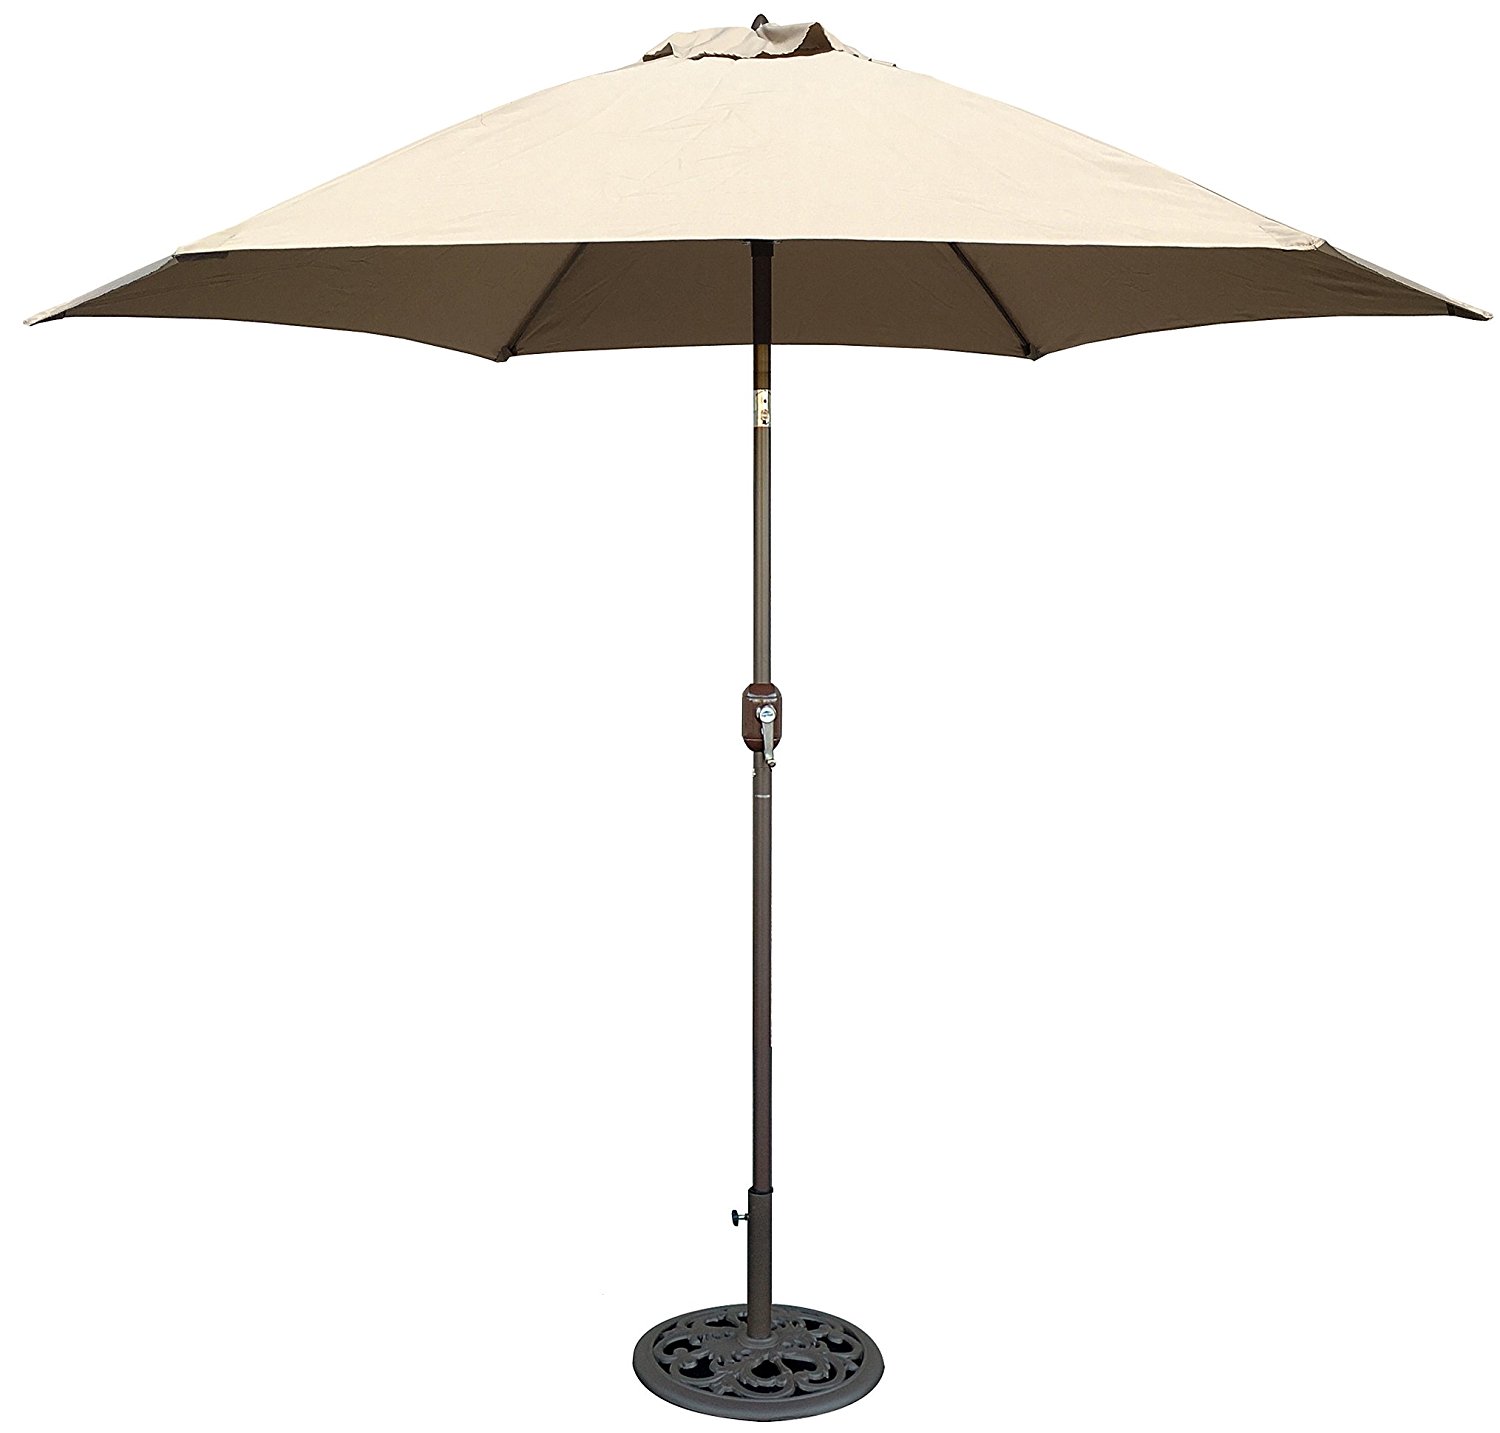 Tropishade 9 ft Bronze Aluminum Patio Umbrella with Beige Polyester Cover